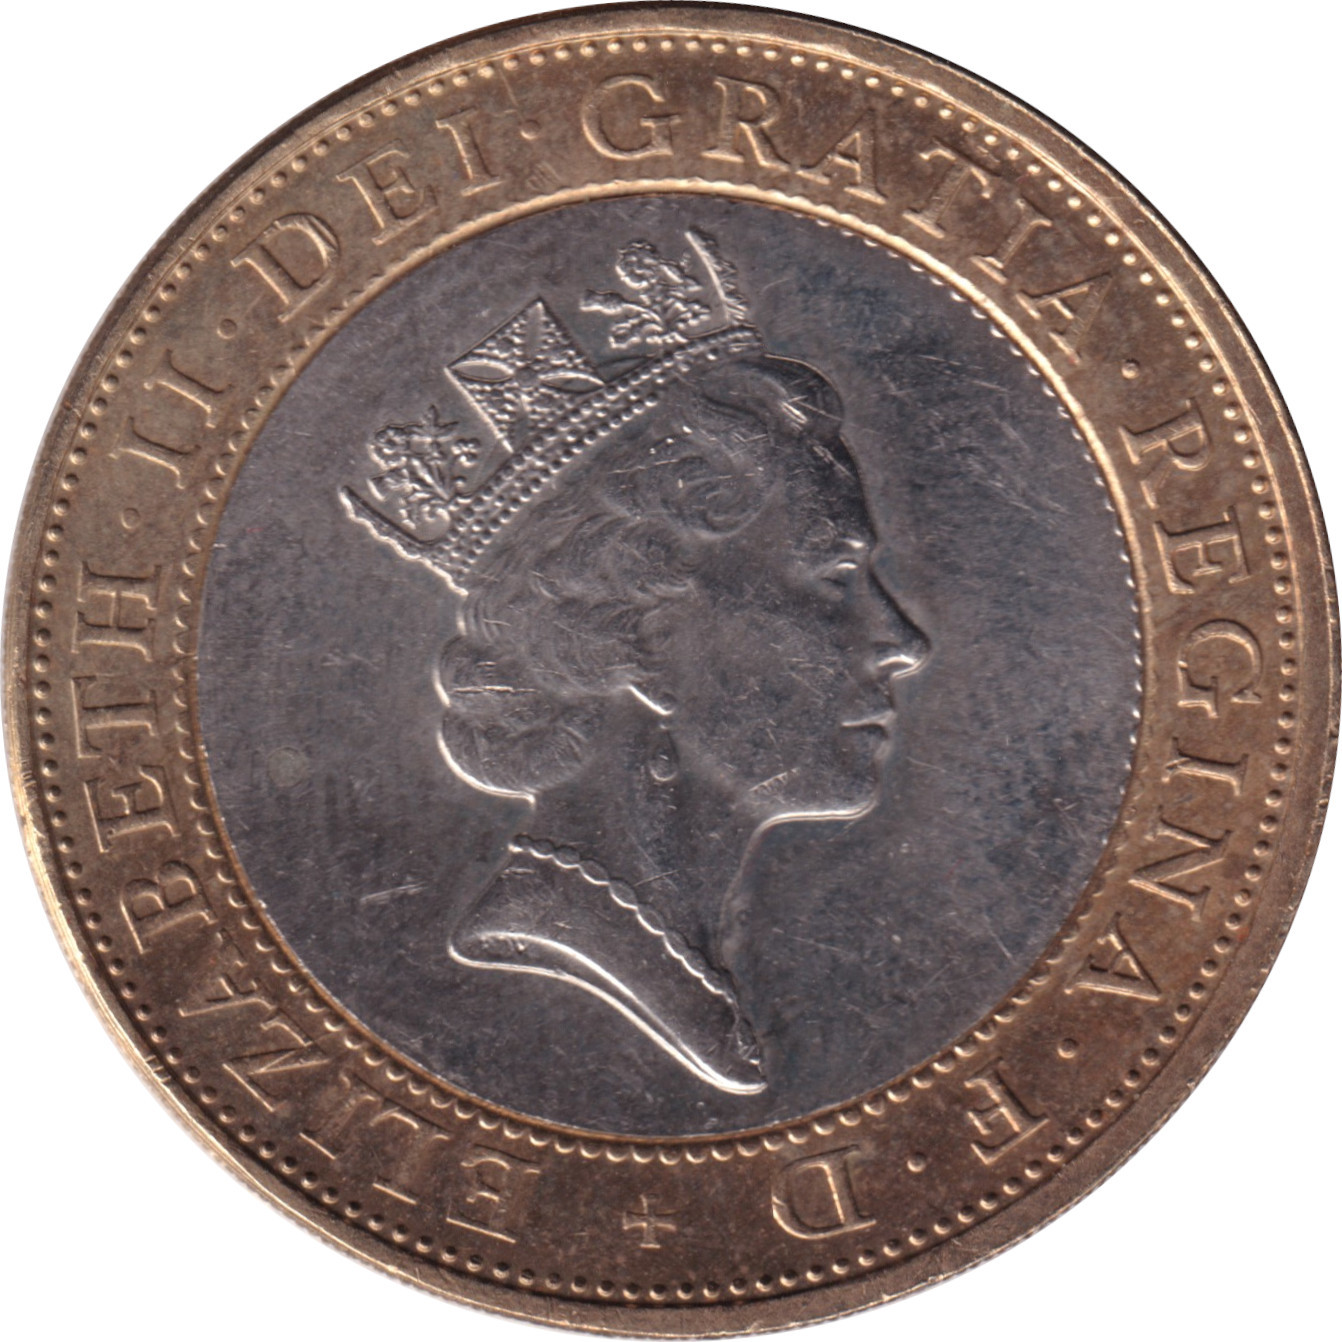 2 pound - Elizabeth II - Mature head